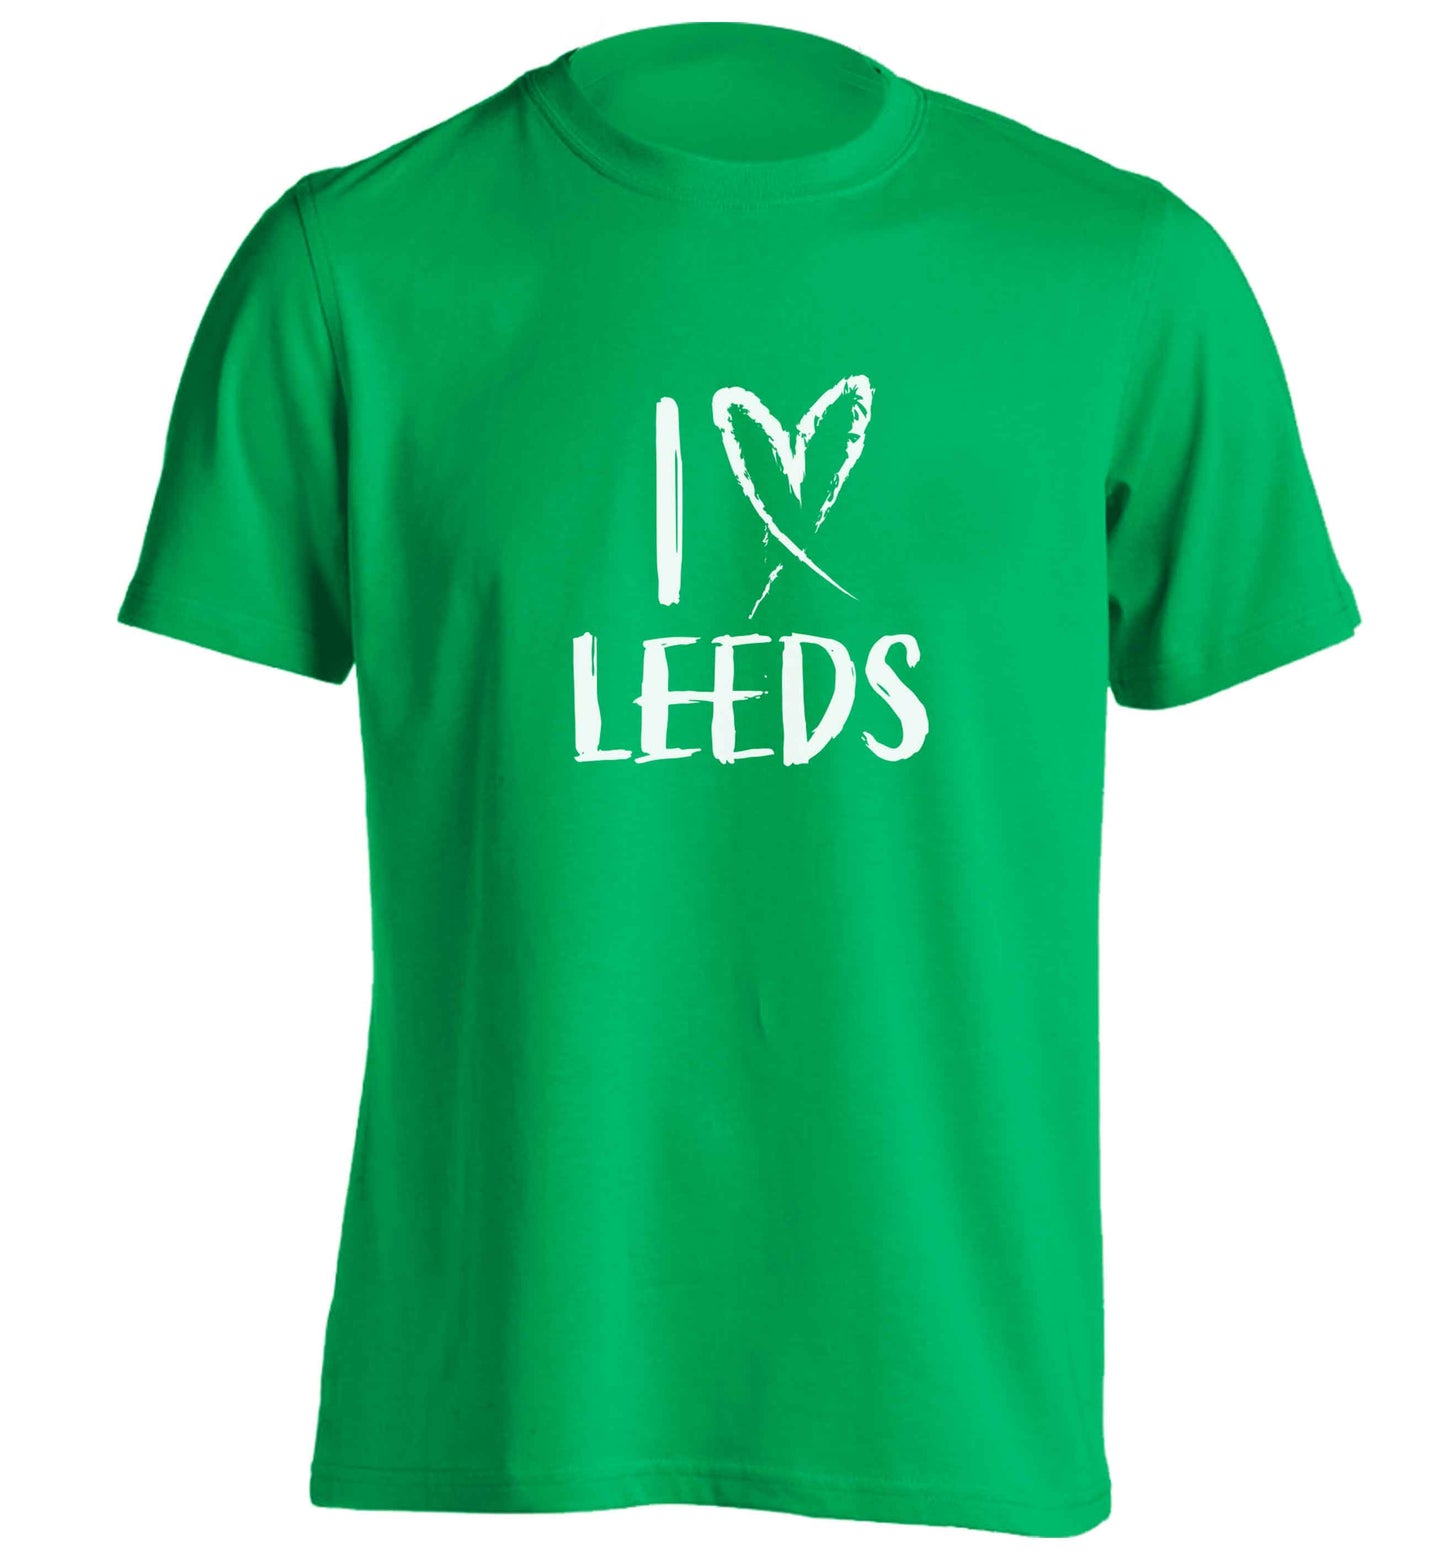 I love Leeds adults unisex green Tshirt 2XL